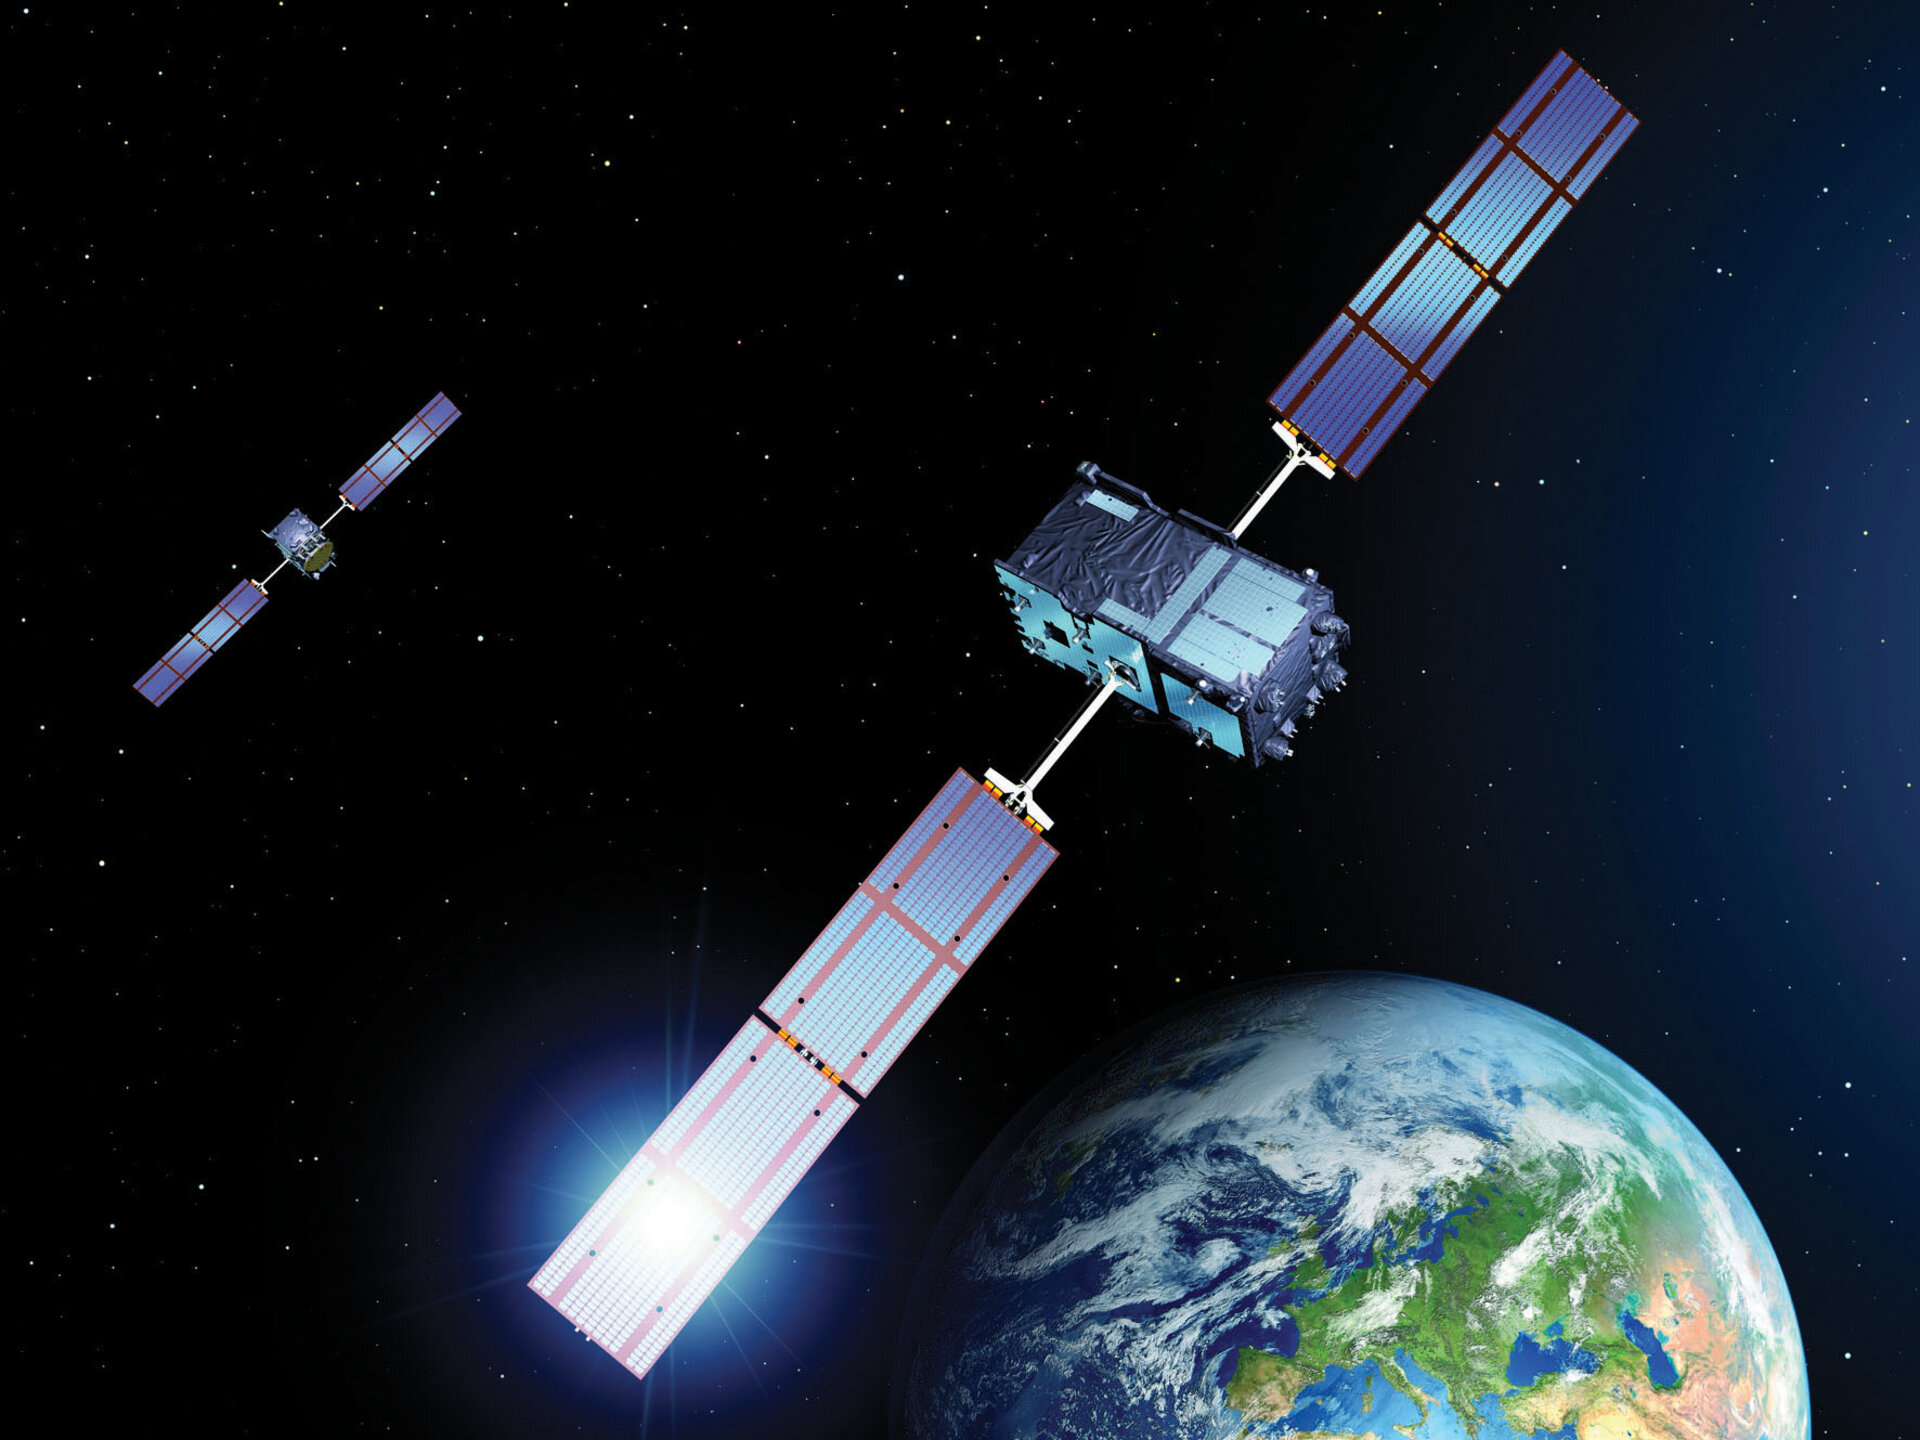 Europe’s global satellite navigation system